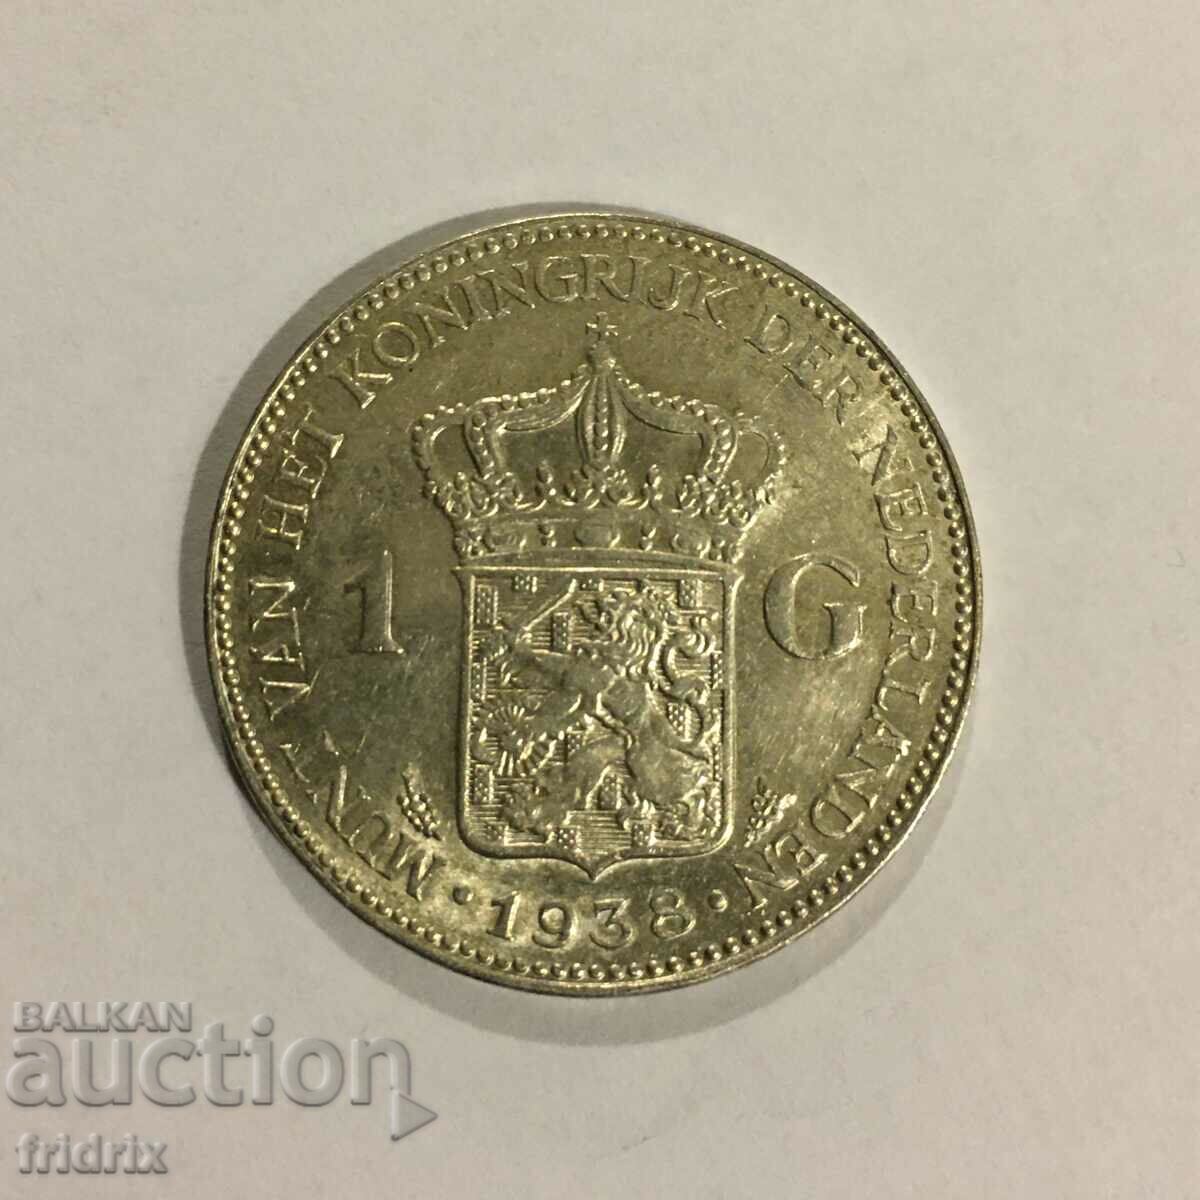 Нидерландия 1 гулден 1938 / Netherlands 1 gulden 1938 UNC